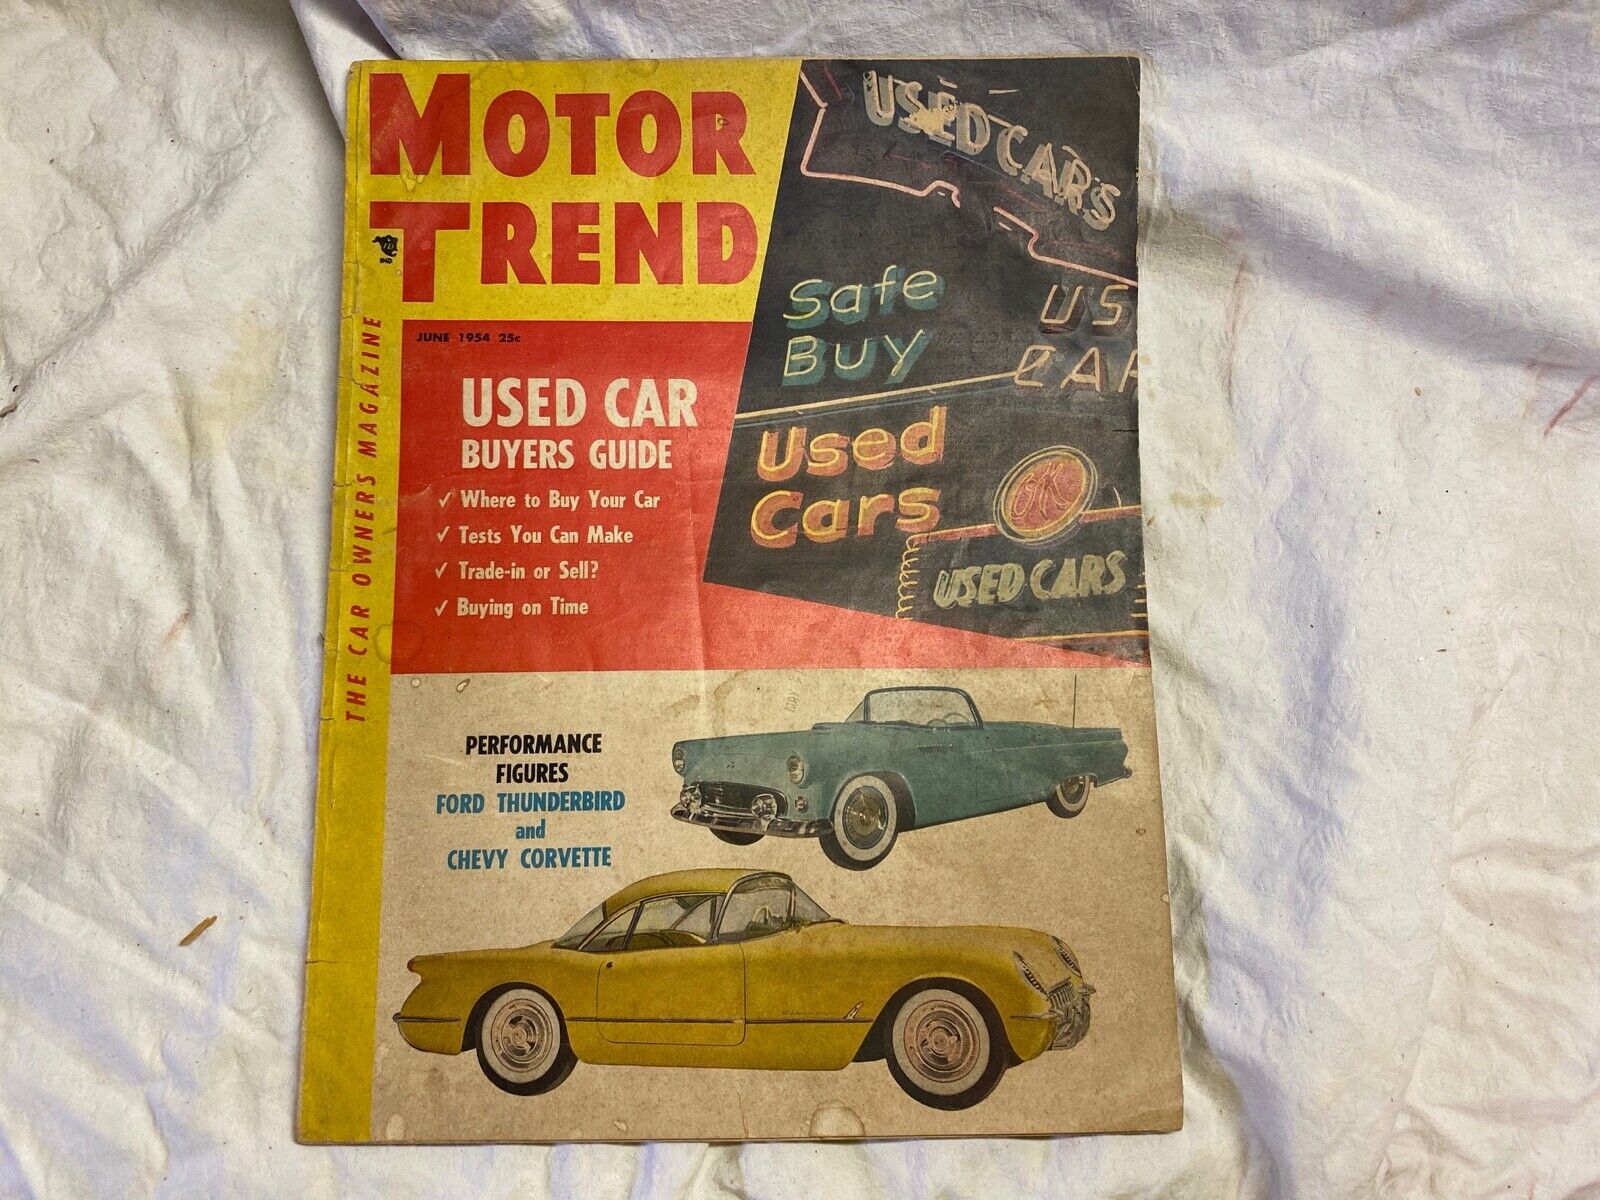 MOTOR TREND used car buyers guide VINTAGE MAGAZINE June 1954 S#1533